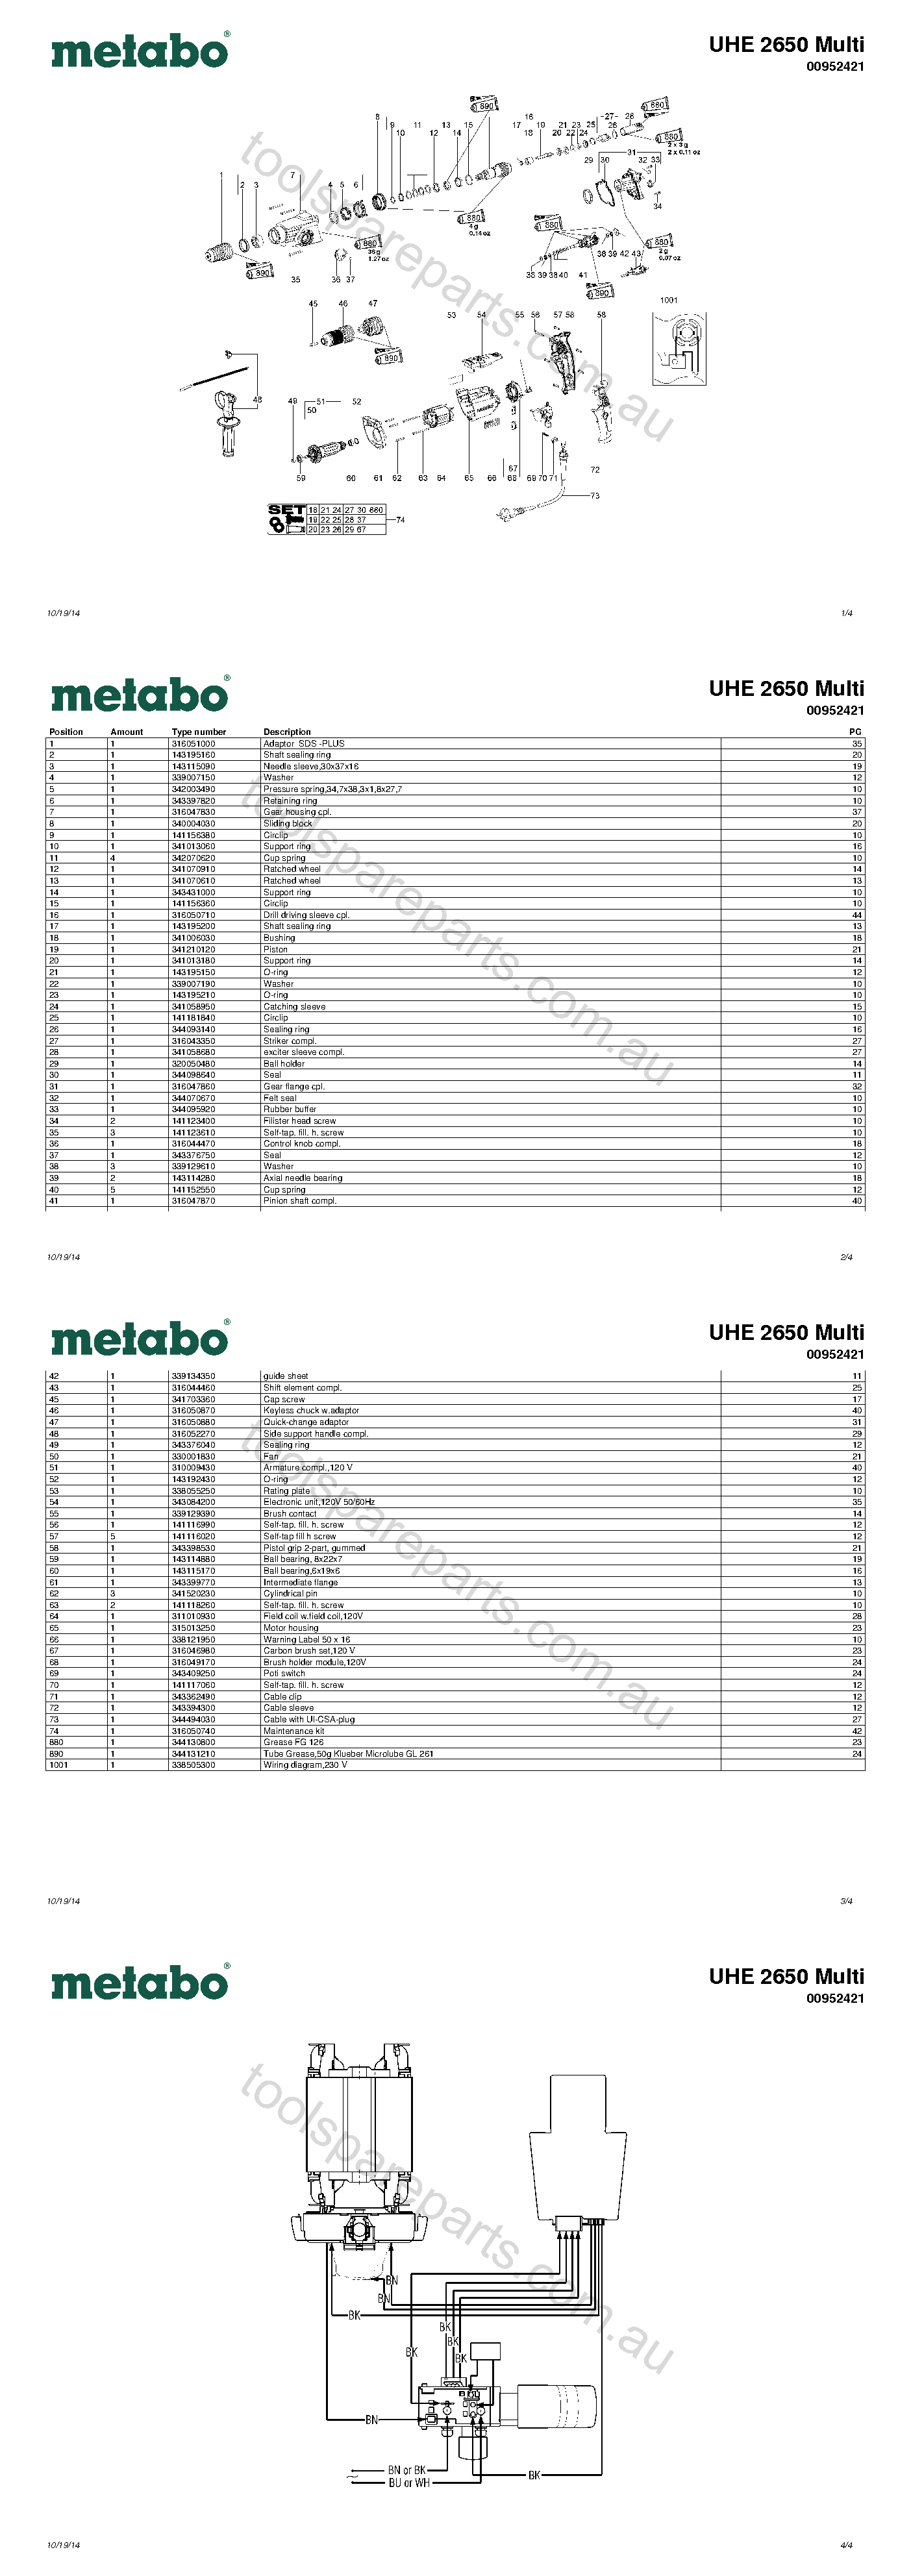 Metabo UHE 2650 Multi 00952421  Diagram 1